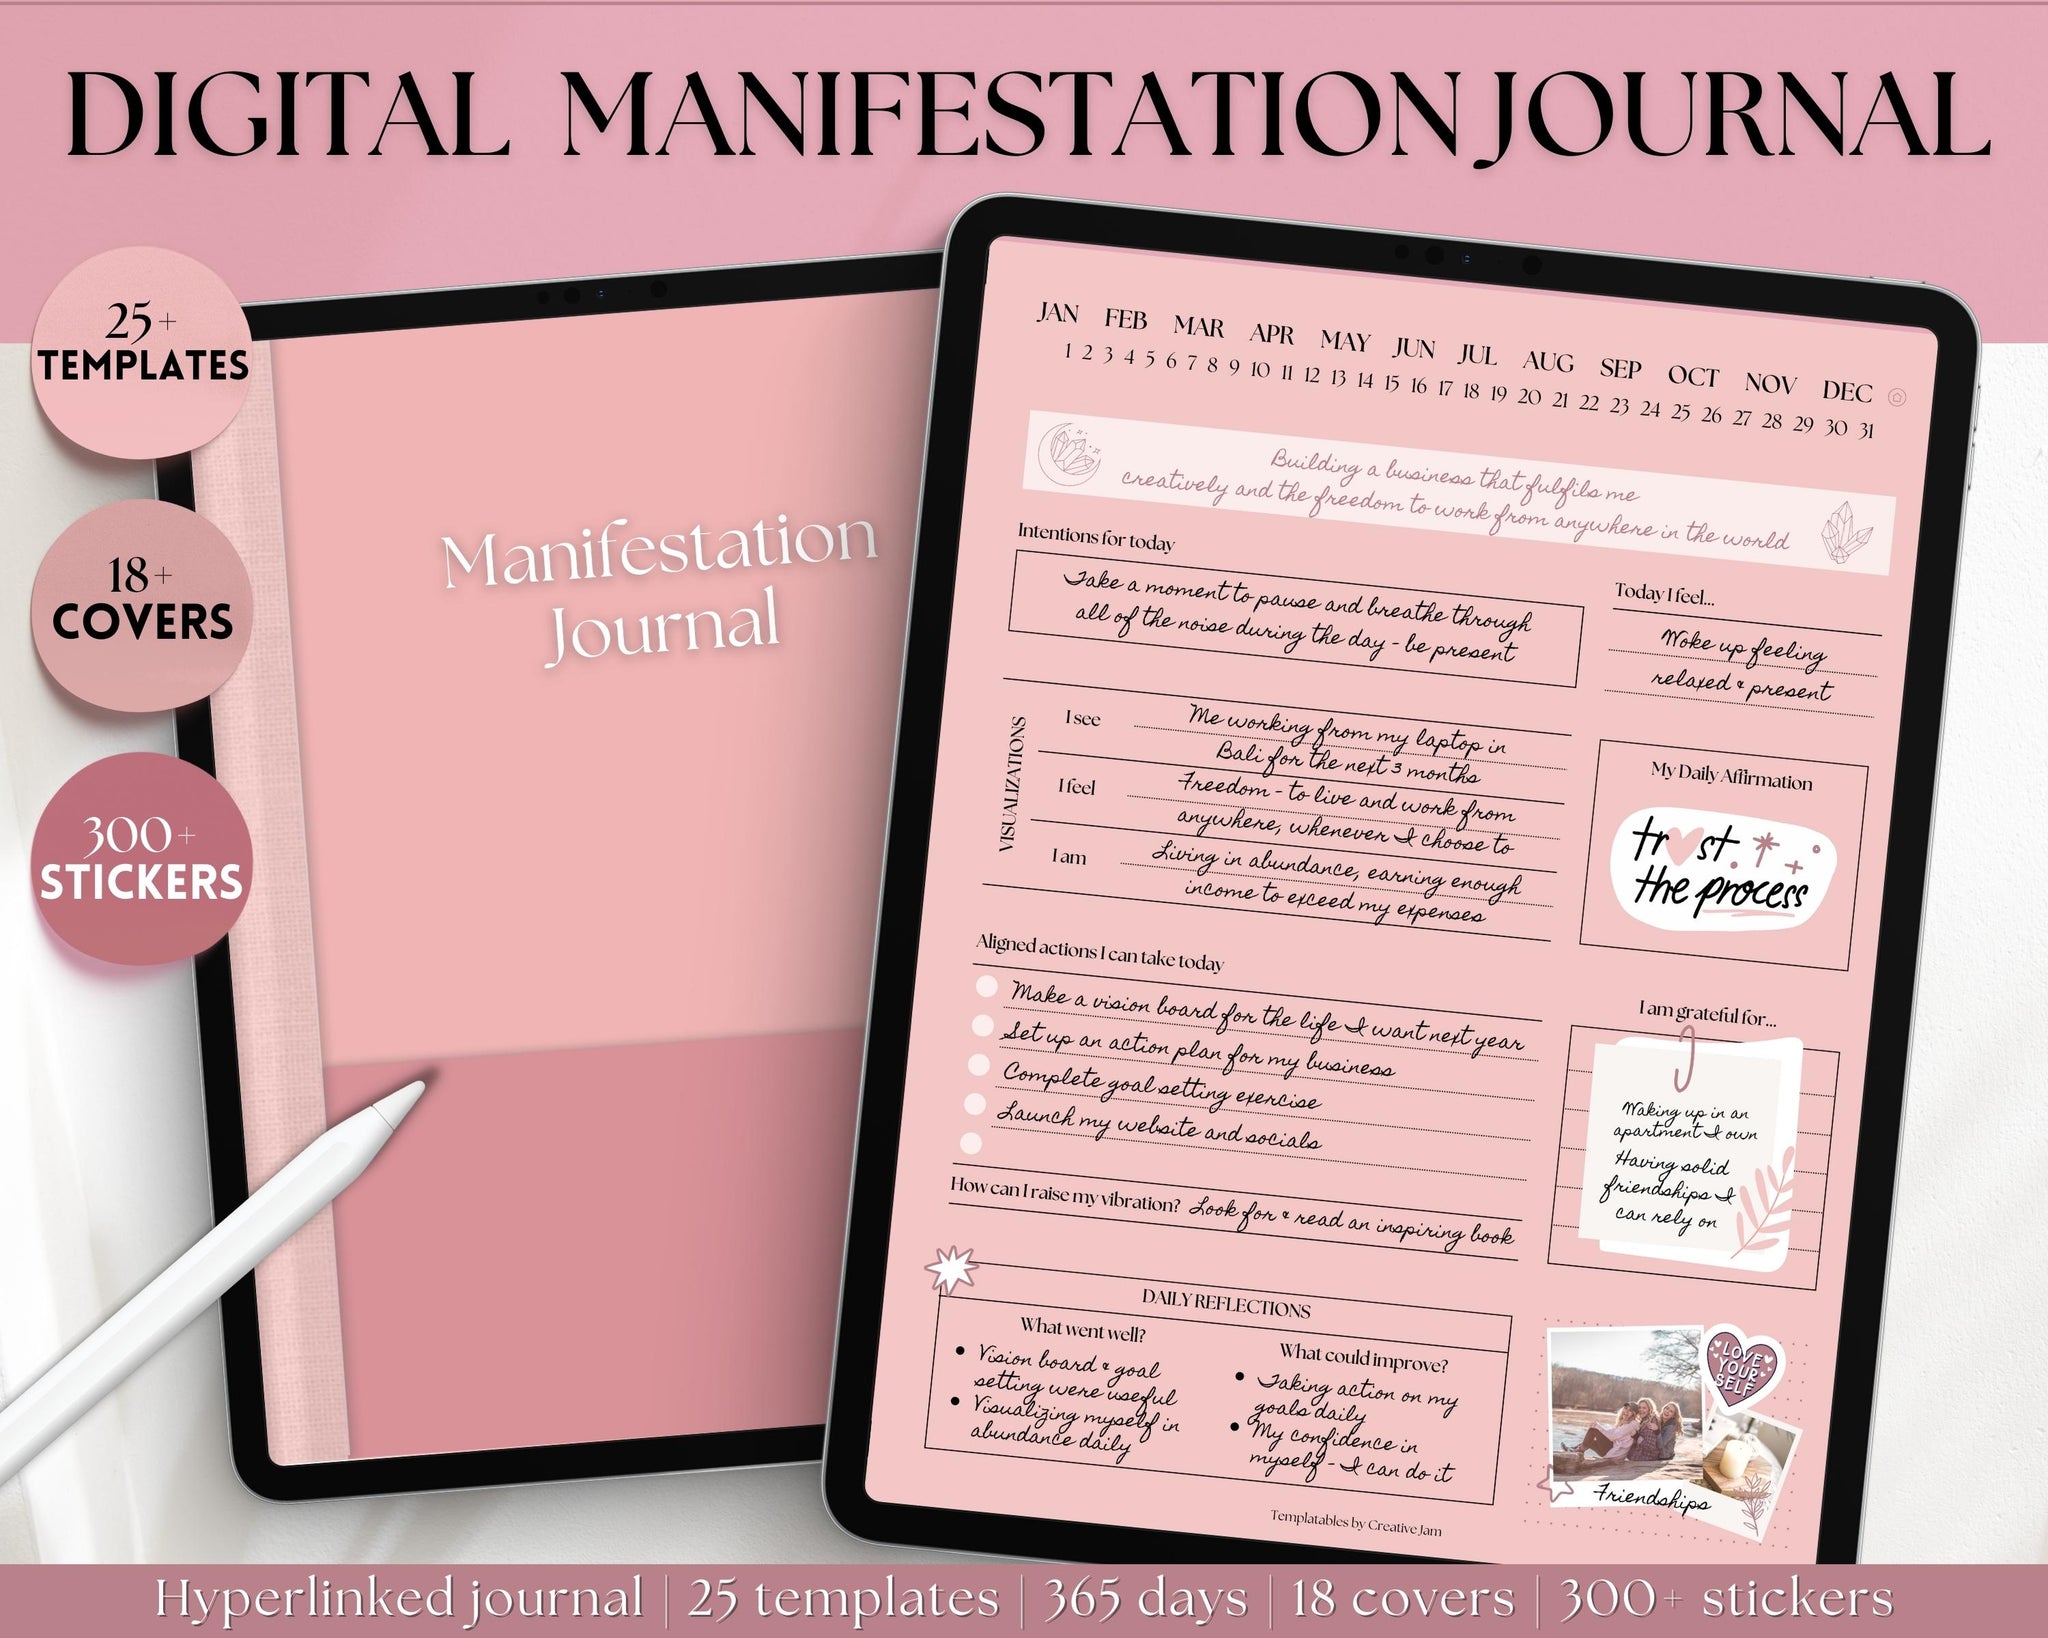 Becoming HER Digital Planner-journal 